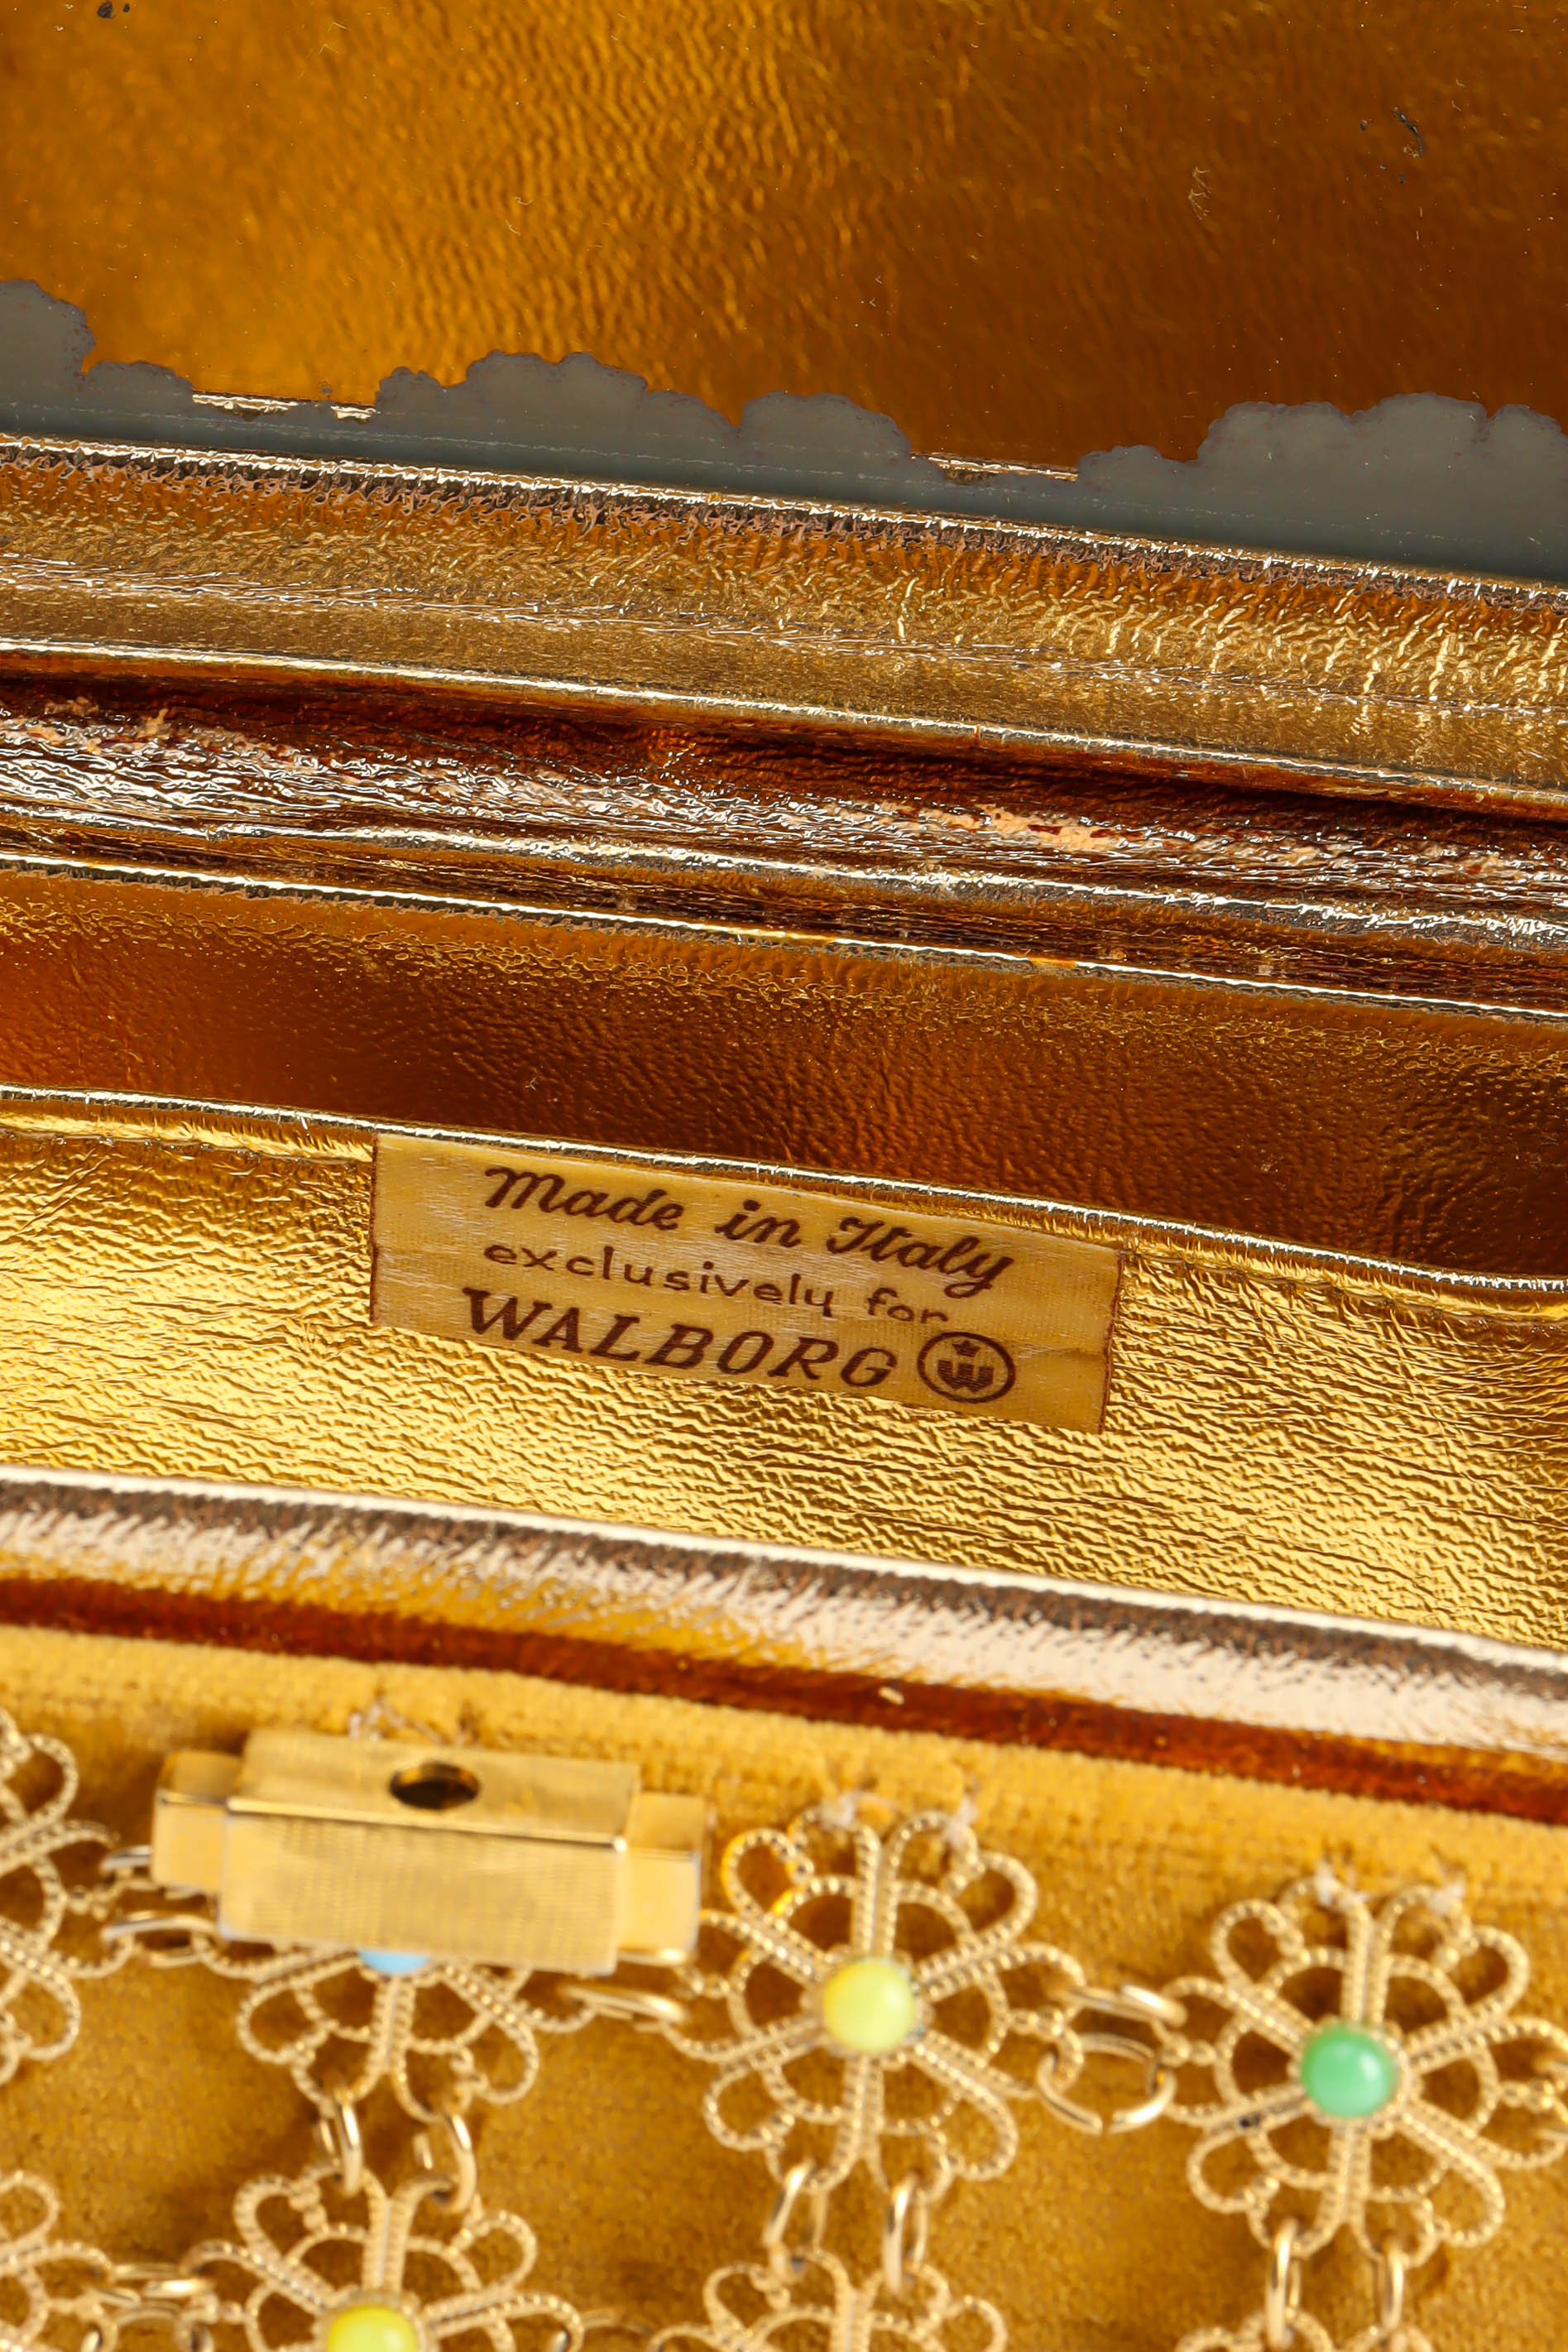 Vintage Walborg Velvet Filigree Pastel Box Bag label @ Recess Los Angeles